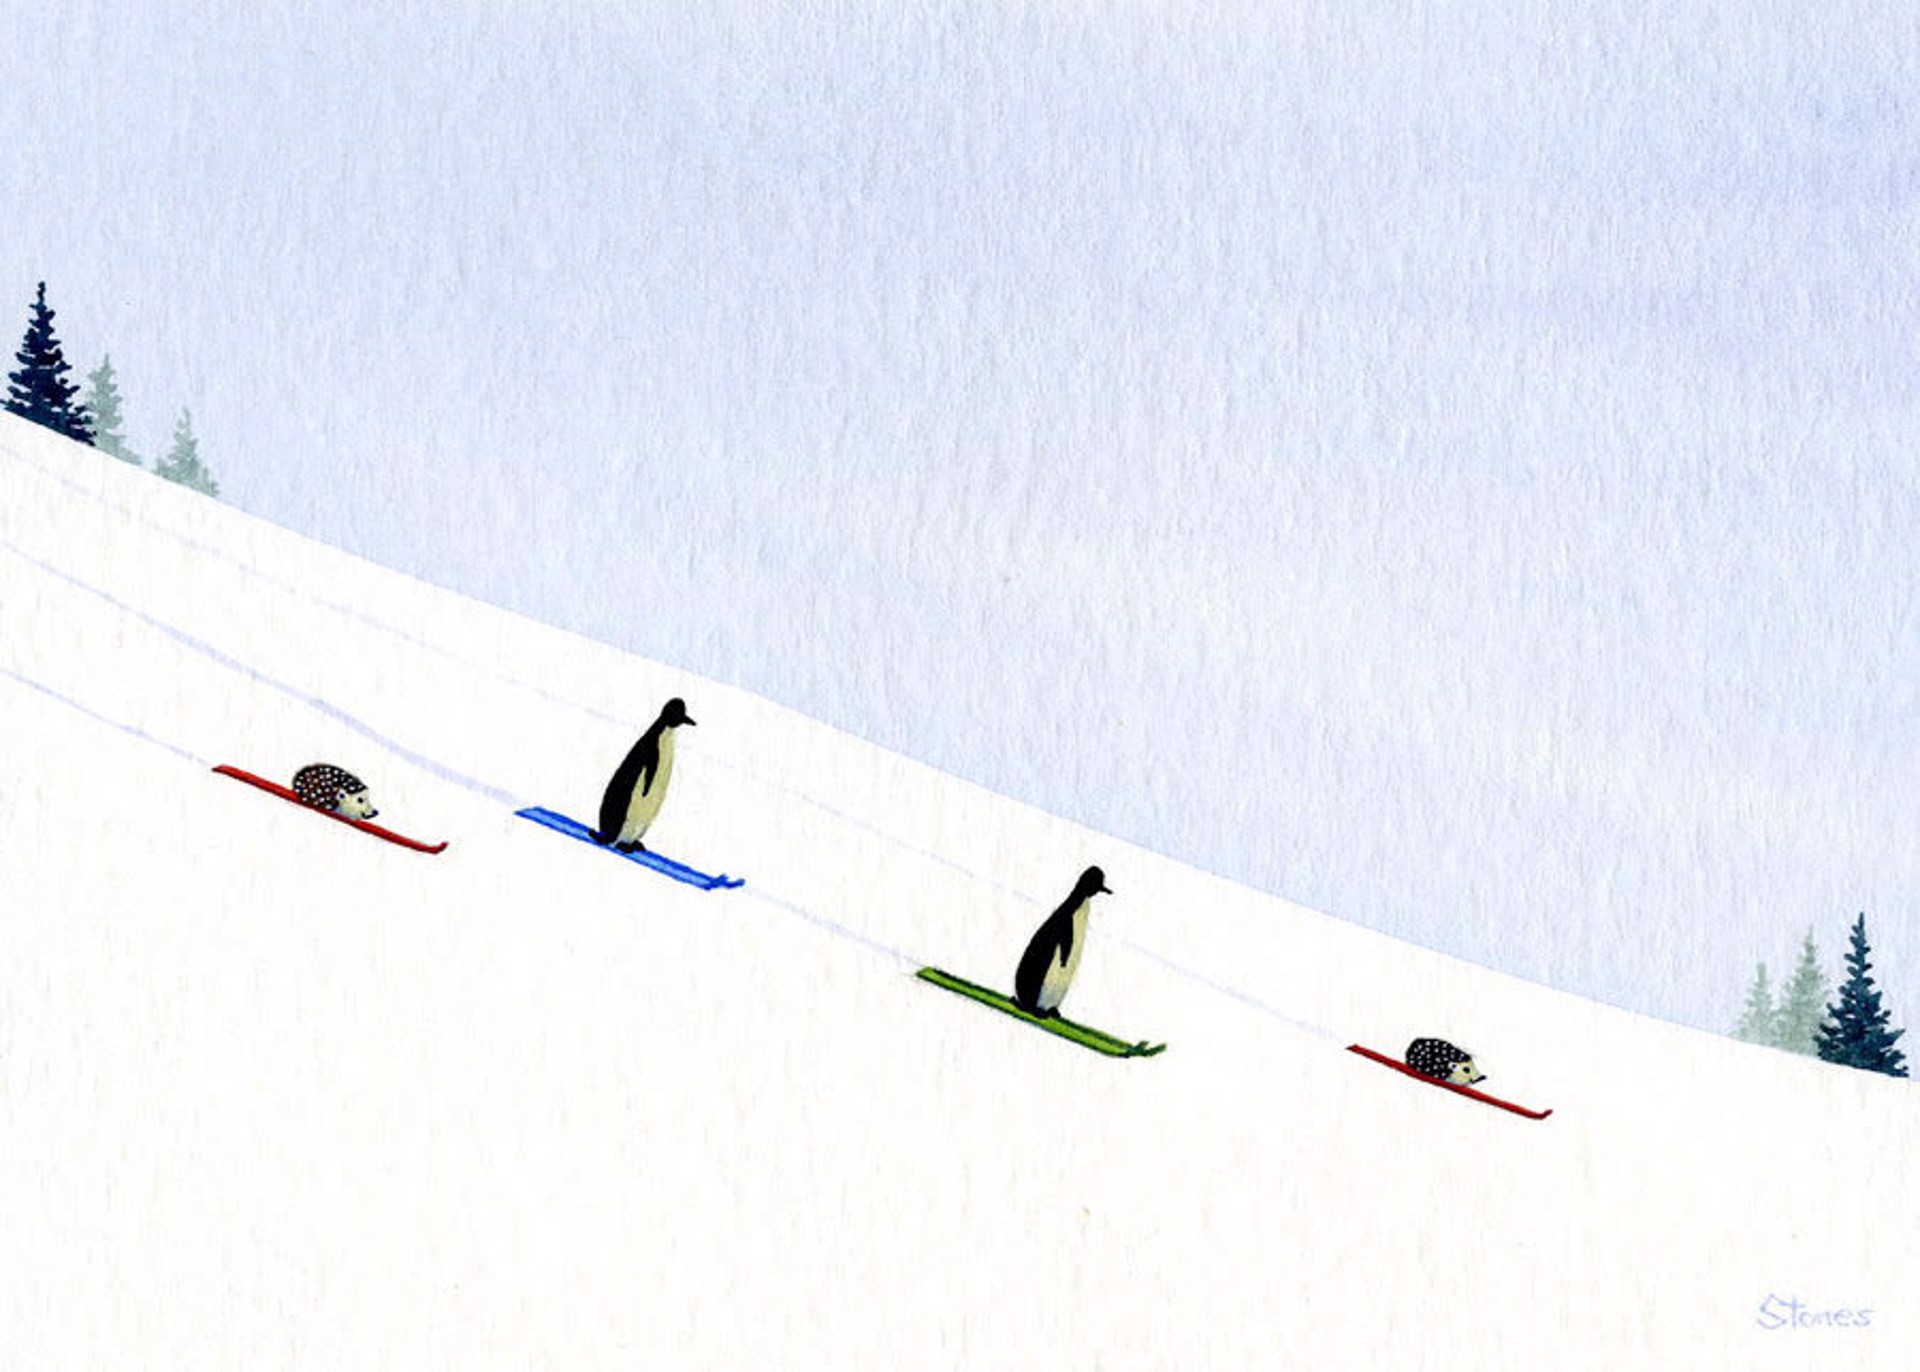 Penguins, Hedgehogs, Skis by Greg Stones